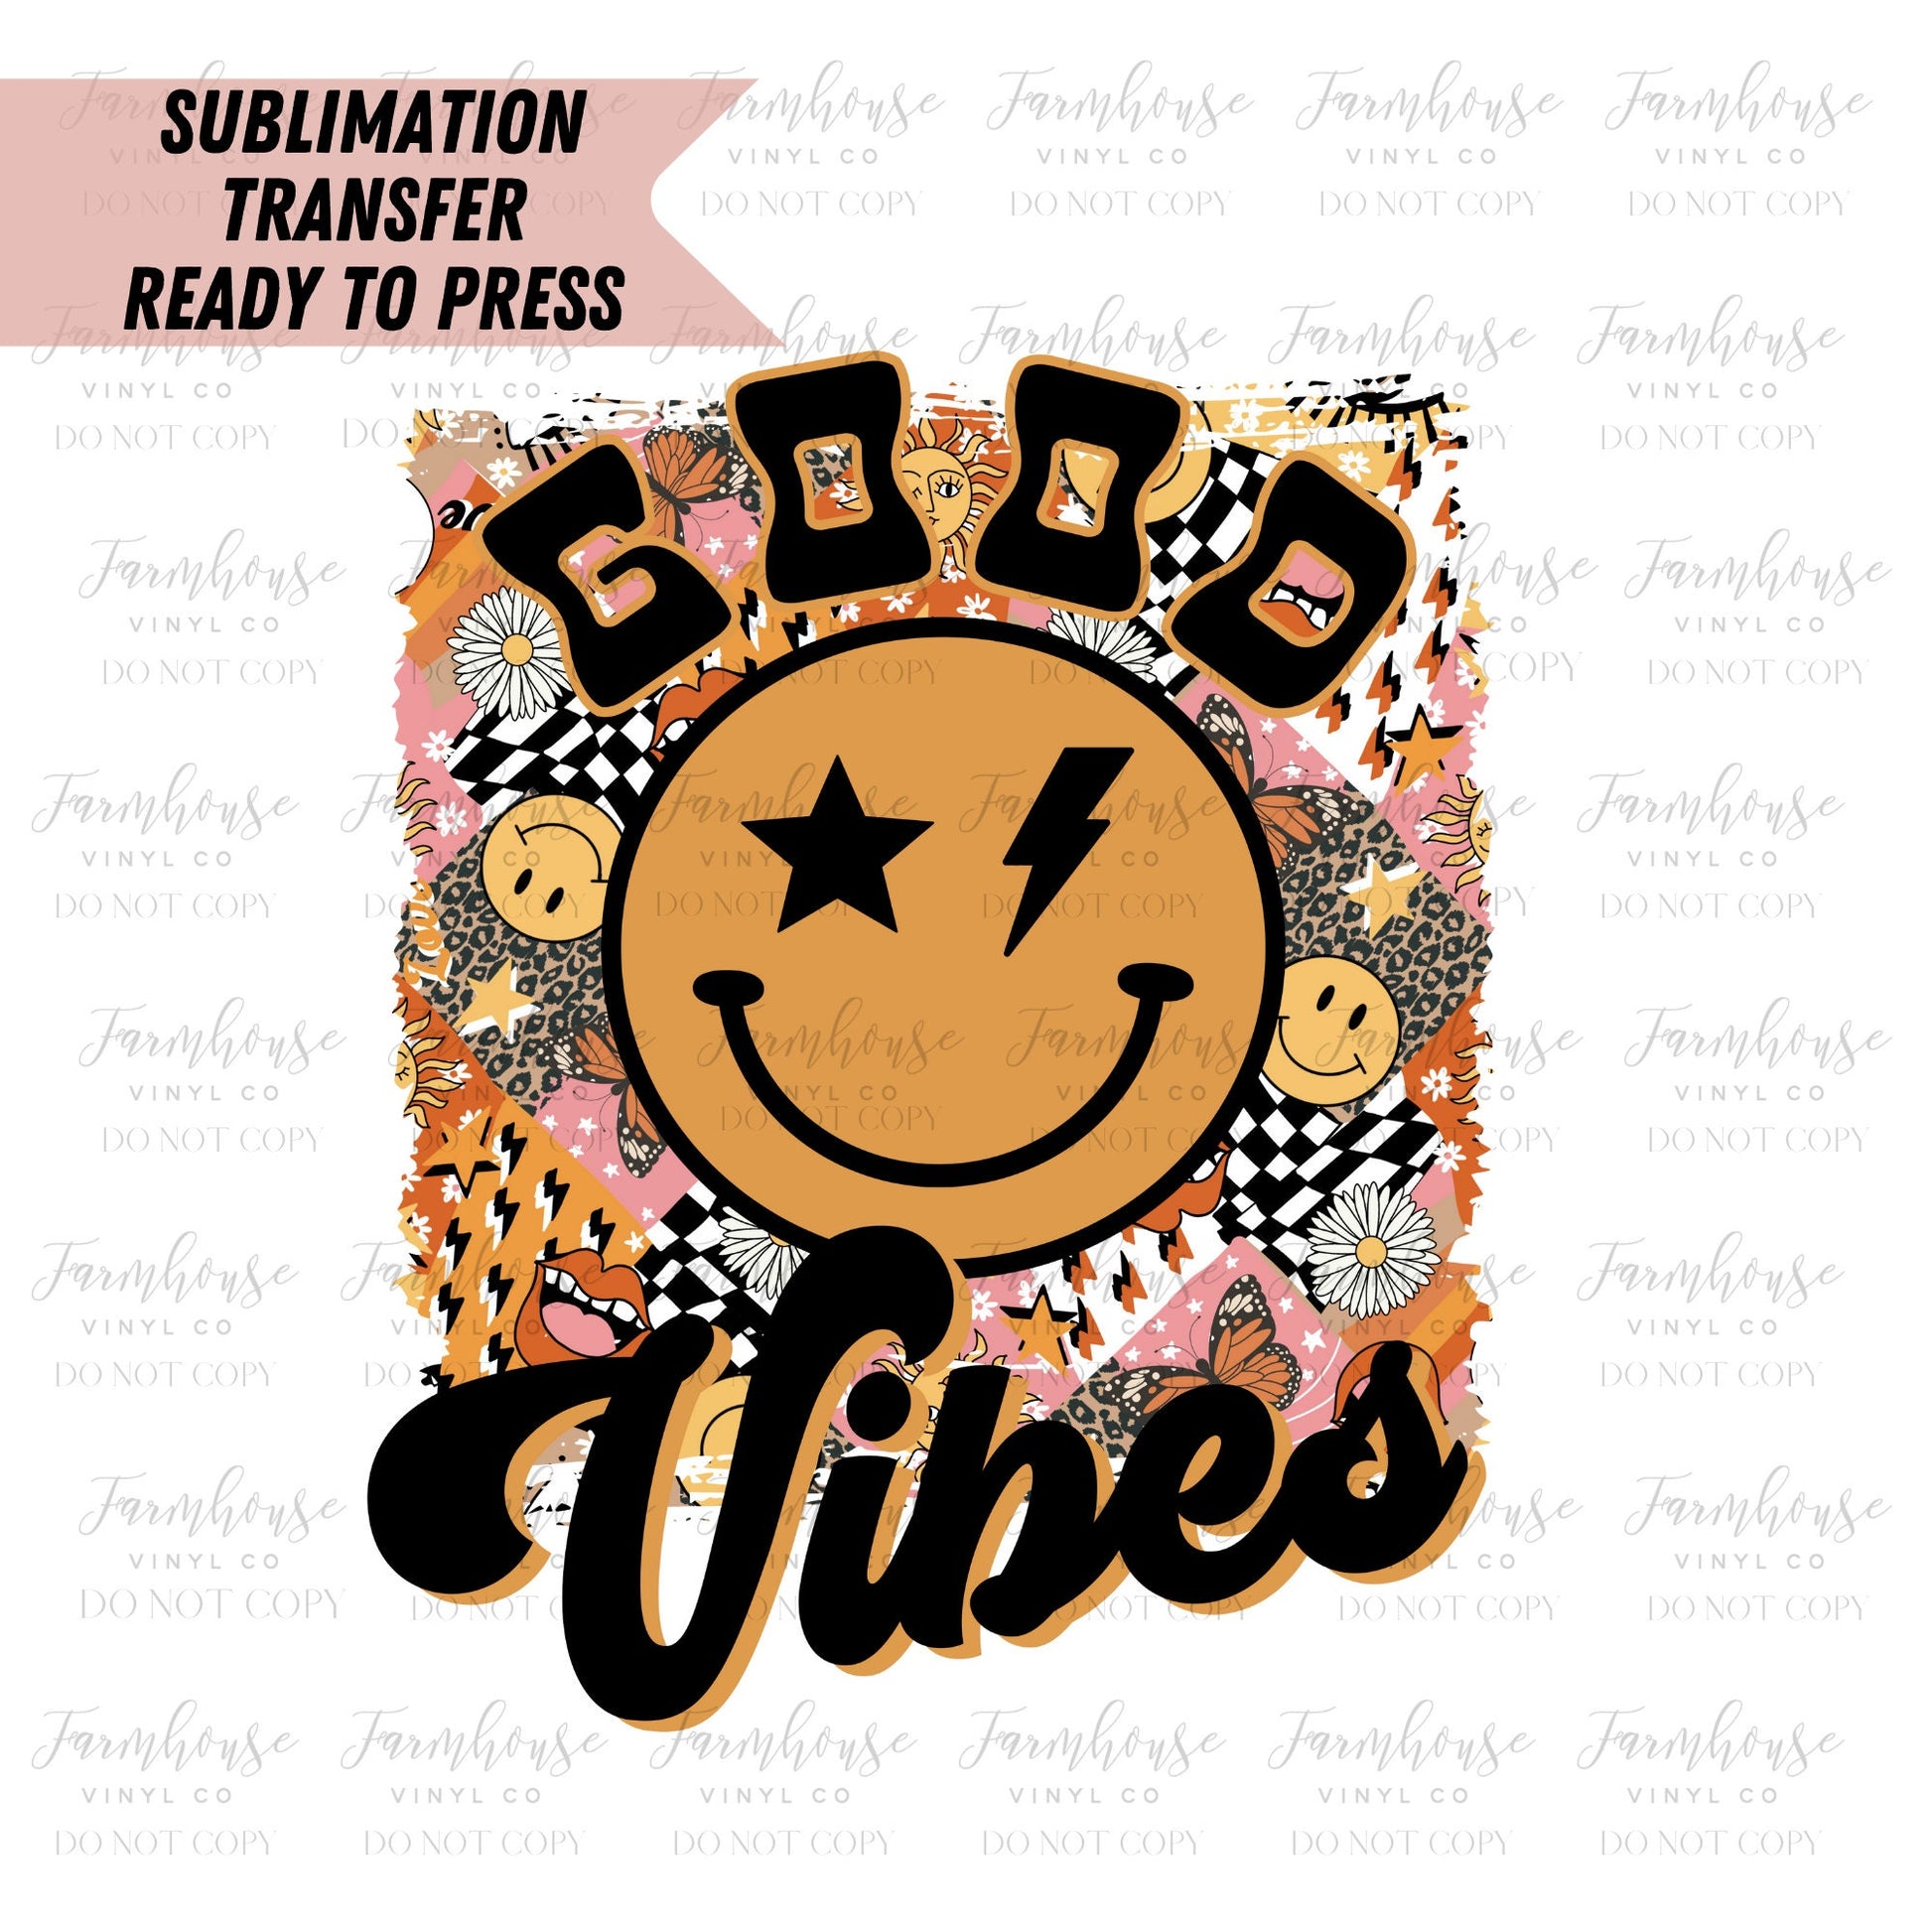 Good Vibes Smiley Face Retro Ready to Press Sublimation Transfer - Farmhouse Vinyl Co